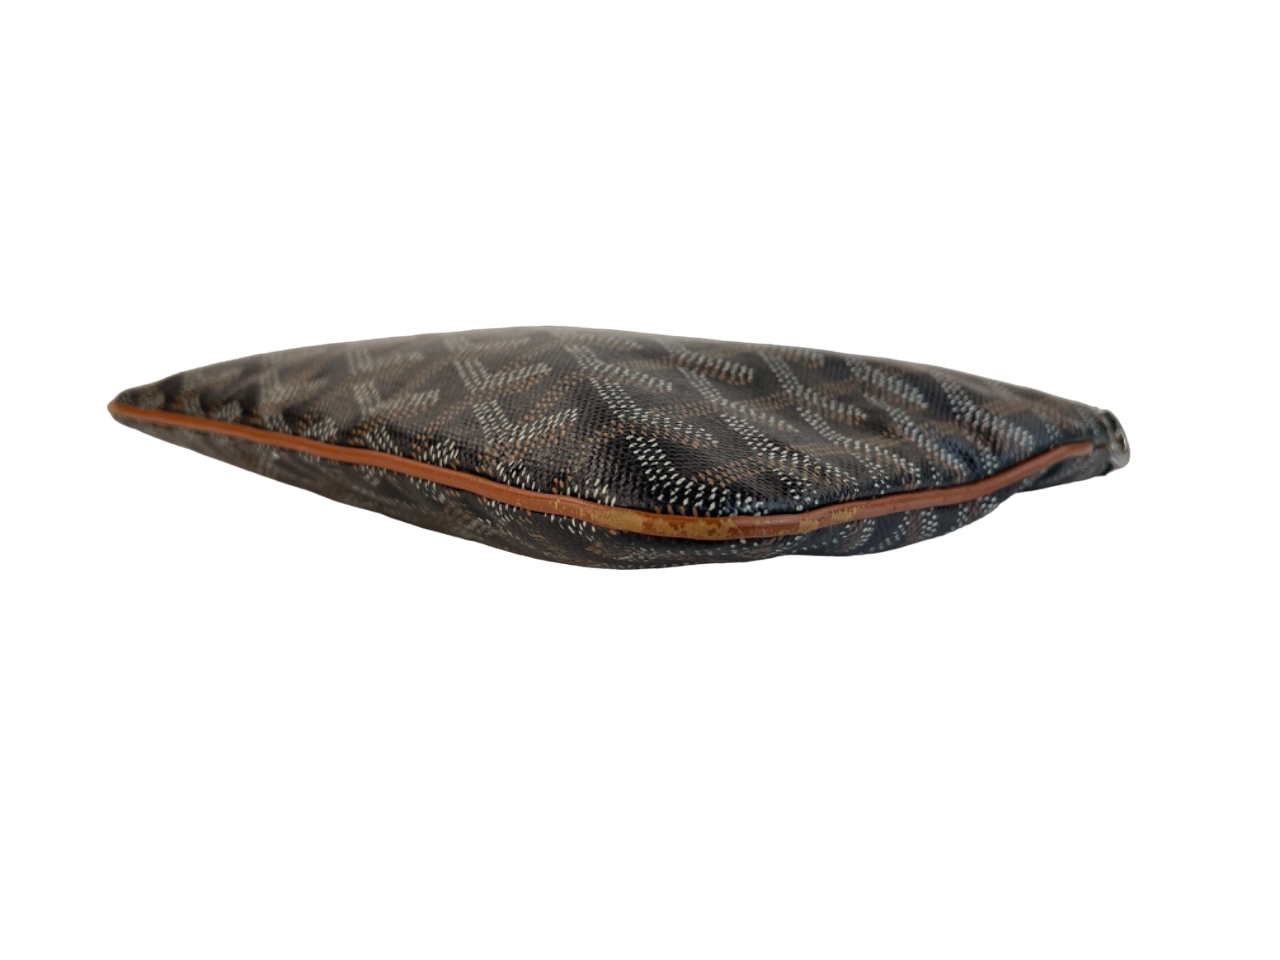 Sénat leather clutch bag Goyard Black in Leather - 32516285